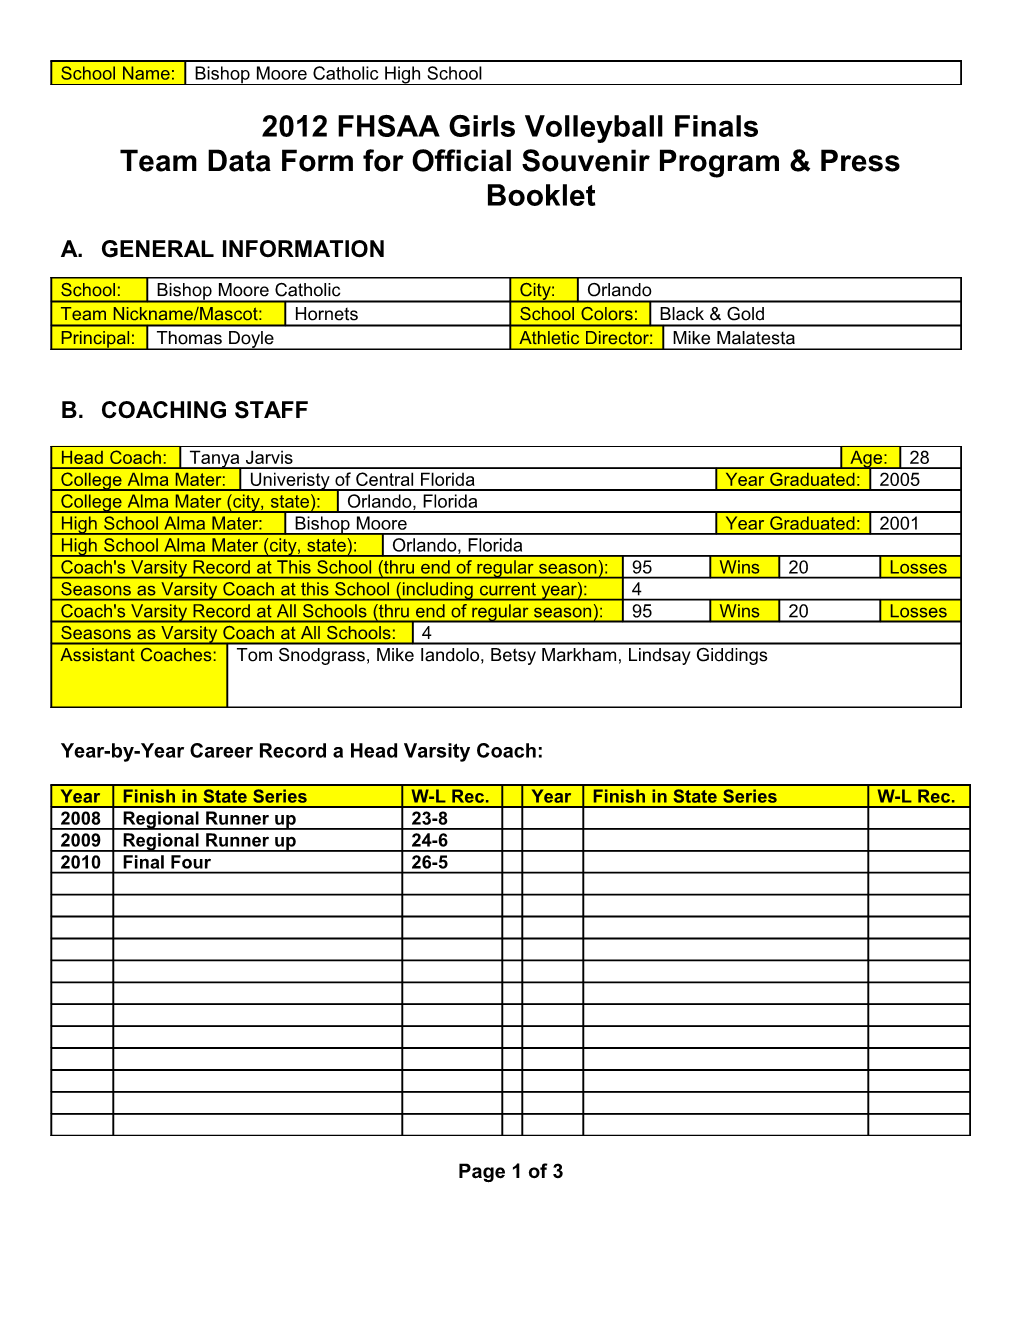 Team Data Form for Official Souvenir Program & Press Booklet s7